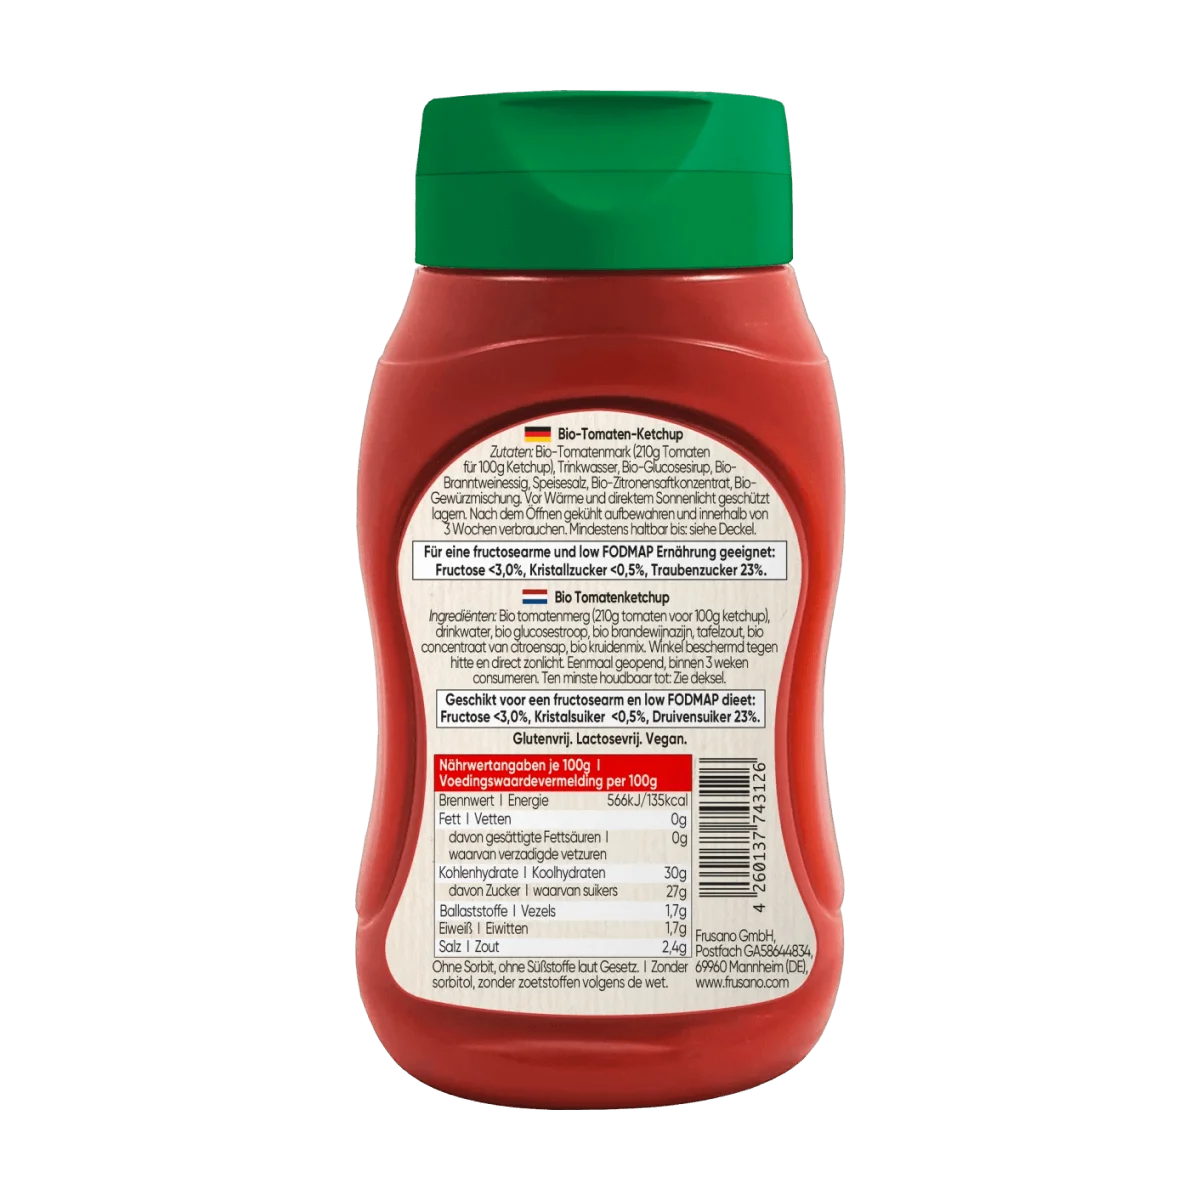 Frusano Bio Tomaten Ketchup, 300 ml